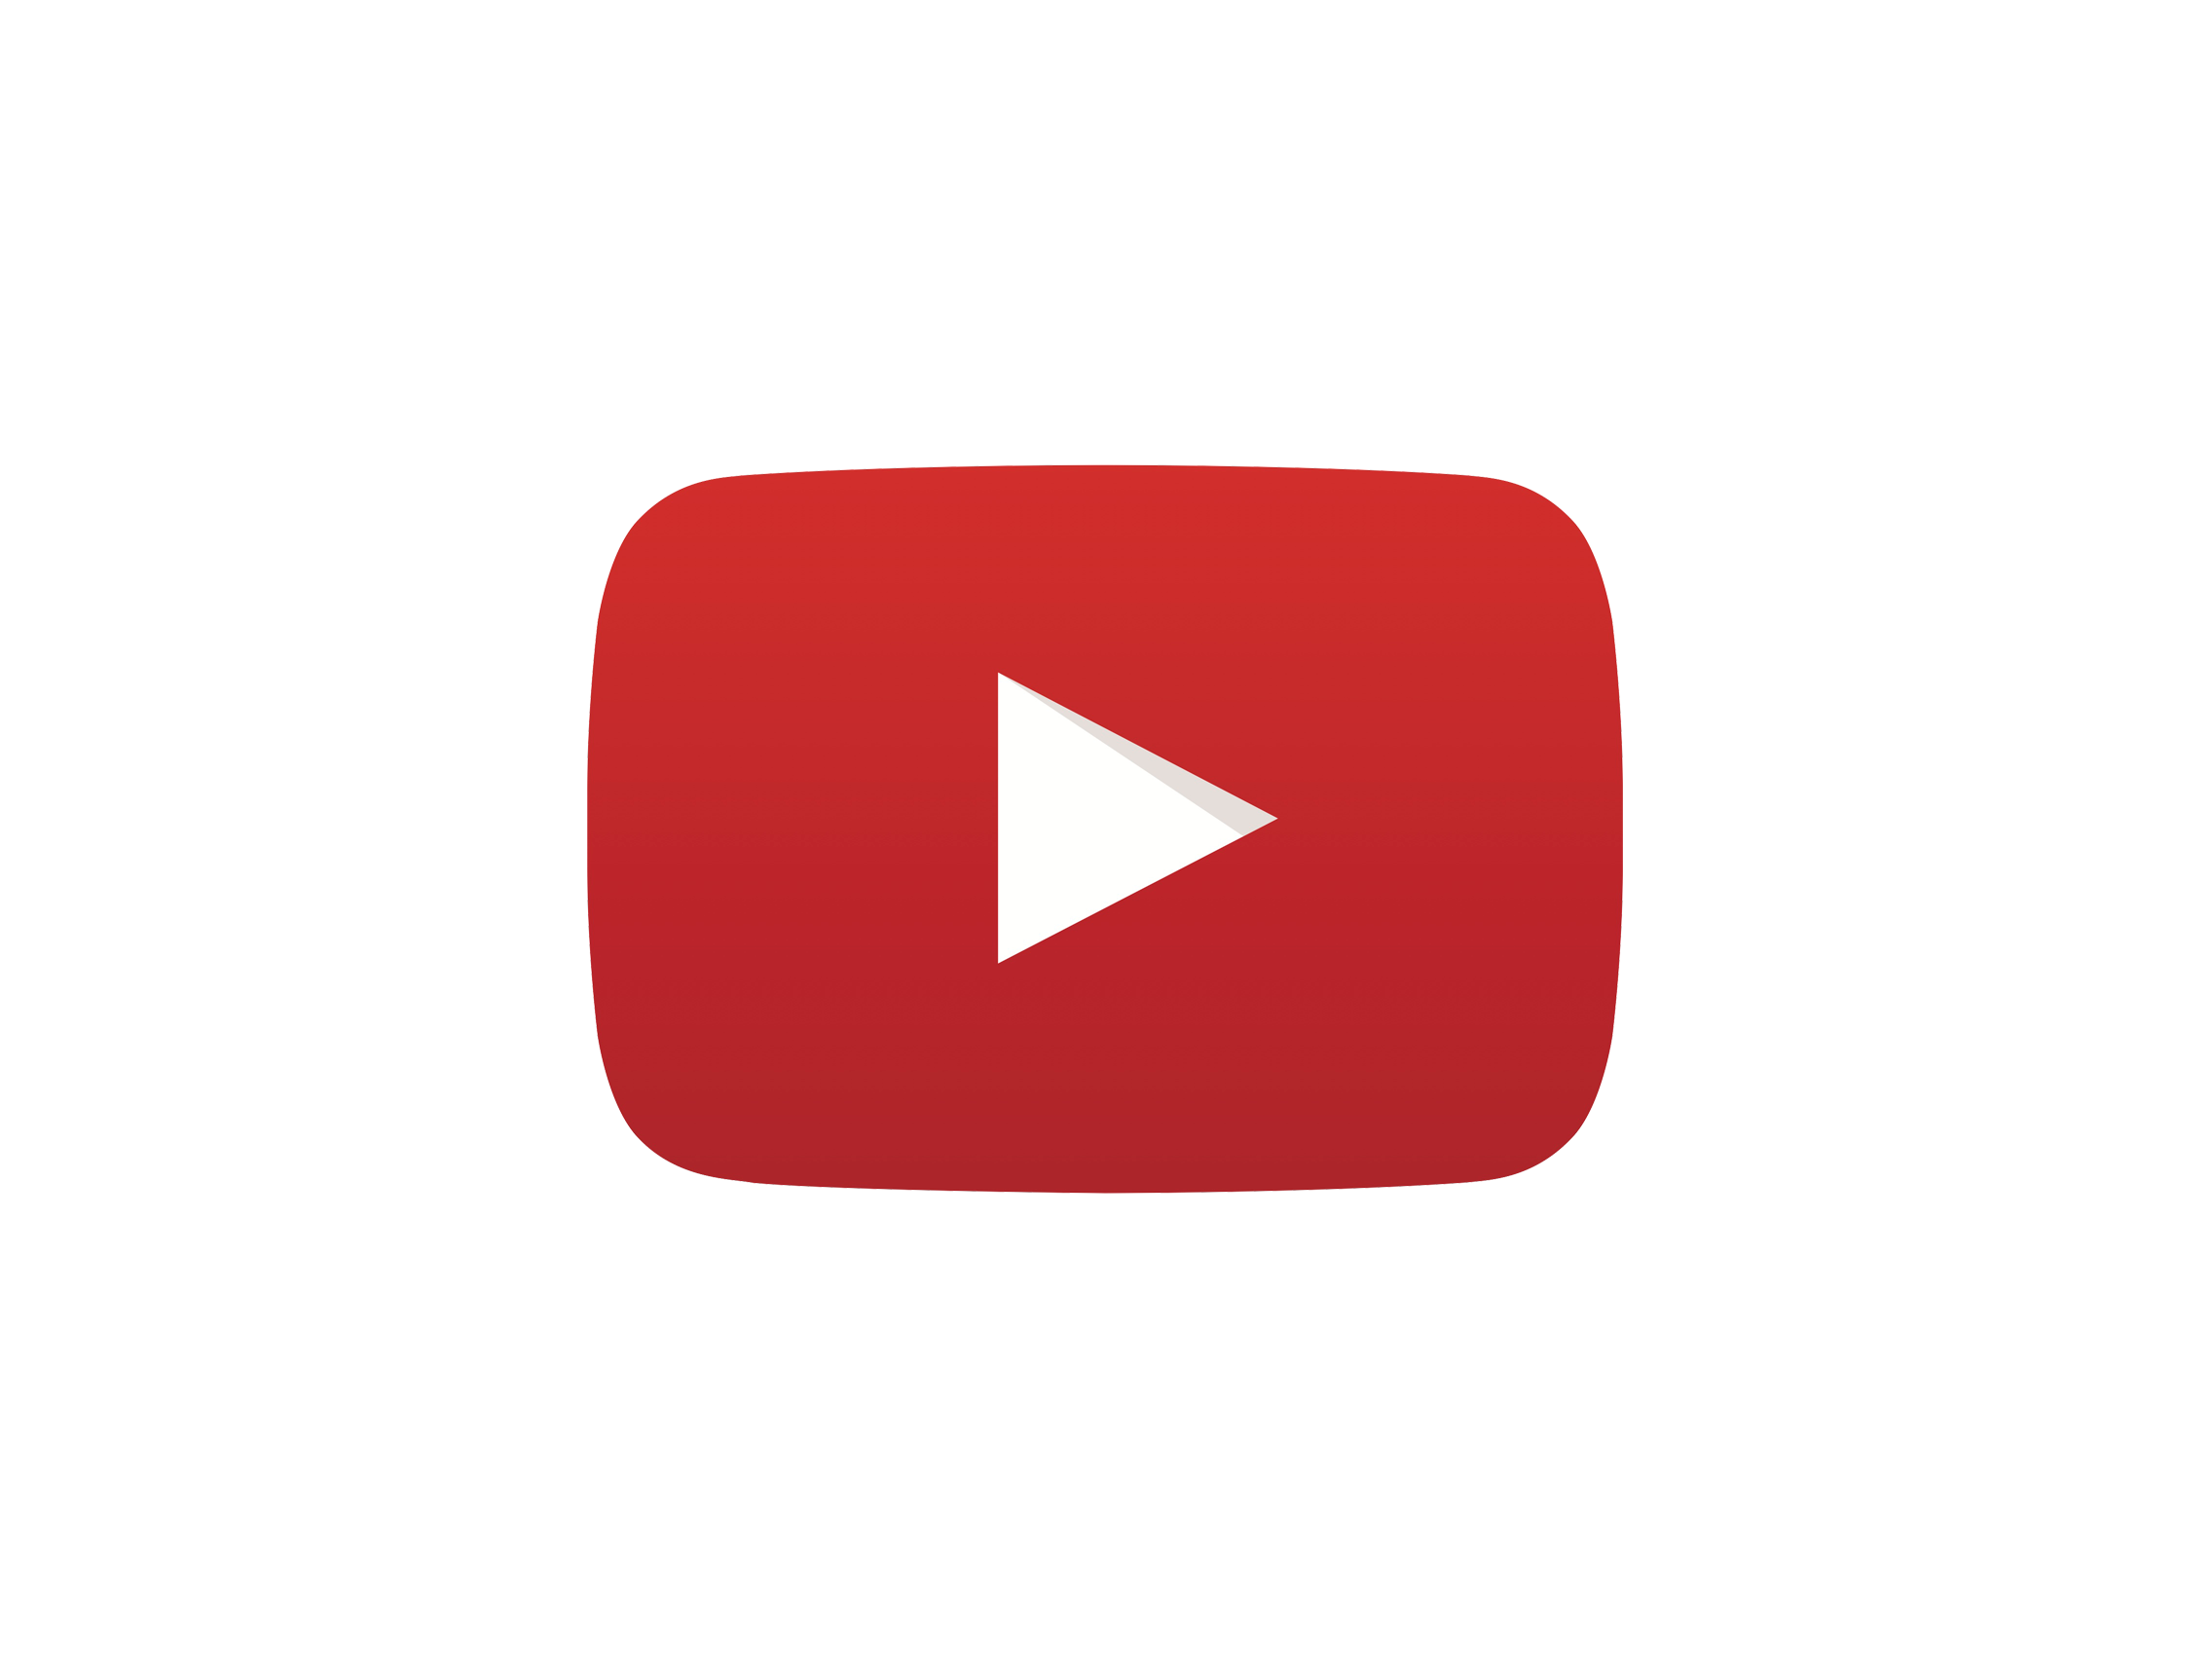 File:YouTube logo (2017).png